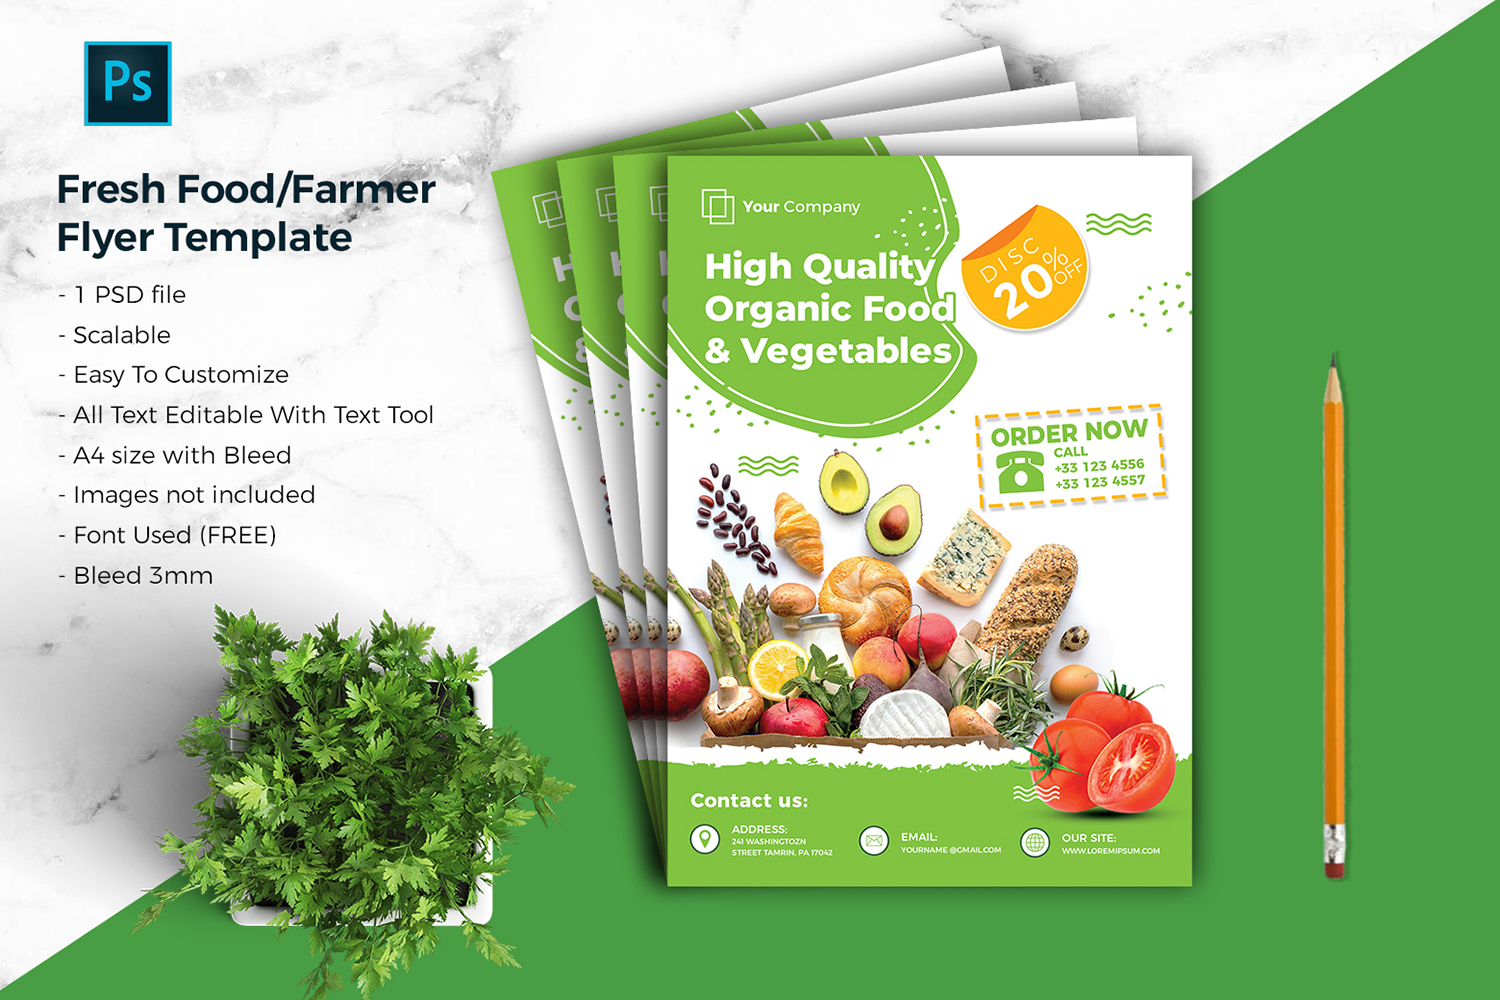 Fresh Food / Farmer Flyer Template Vol-03 Corporate Identity Template